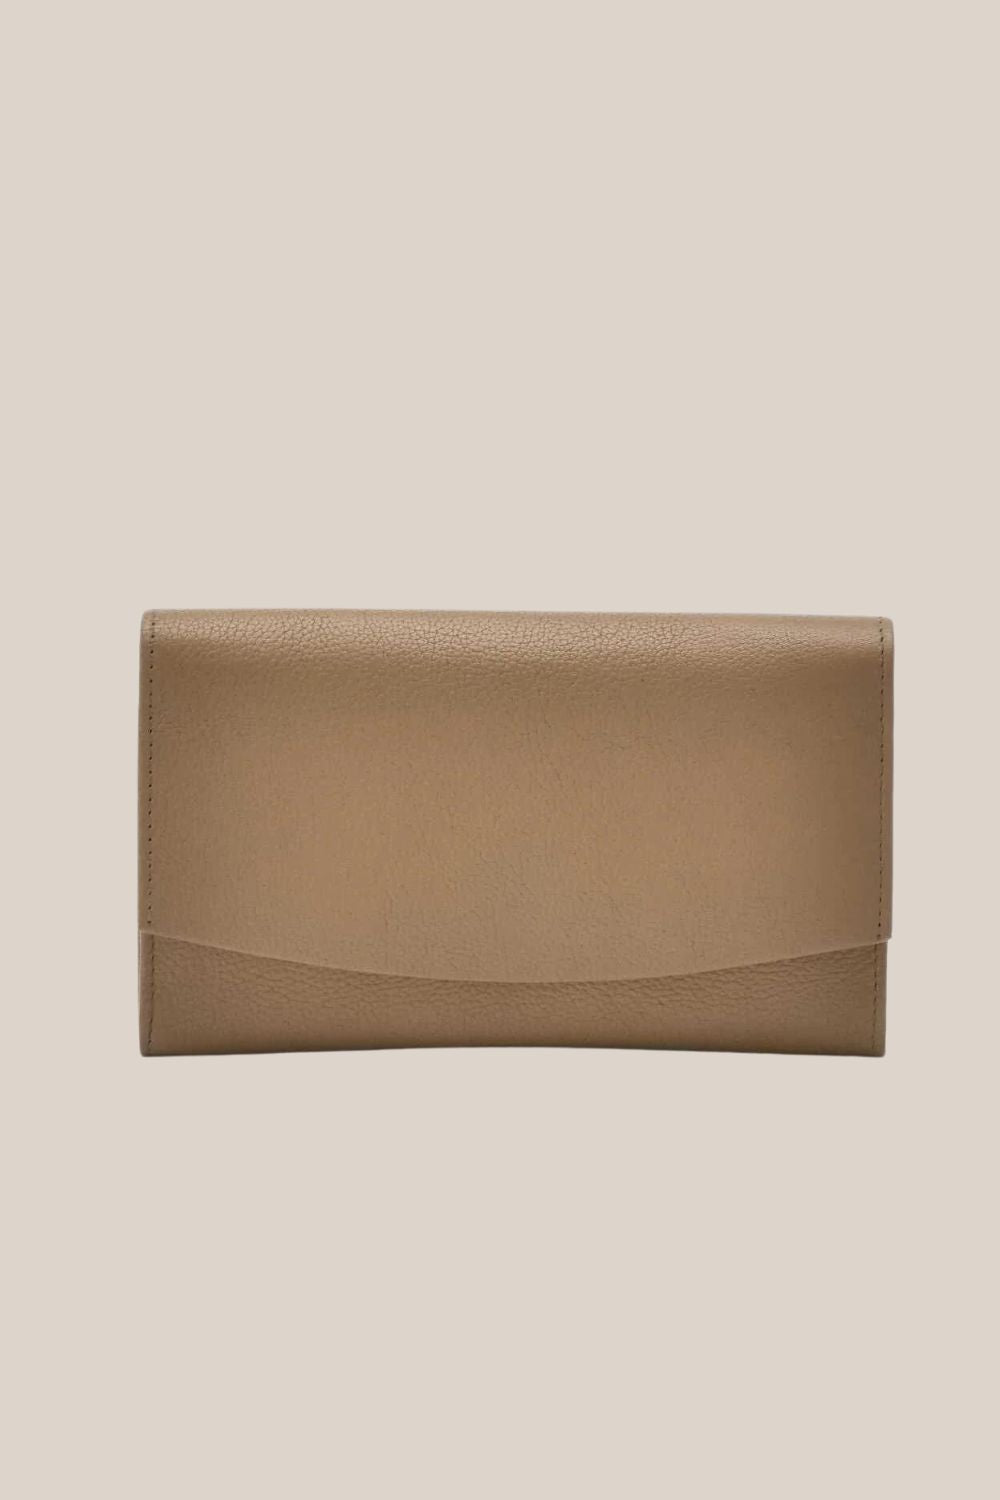 Cobb & Co Erina Ladies Leather Wallet